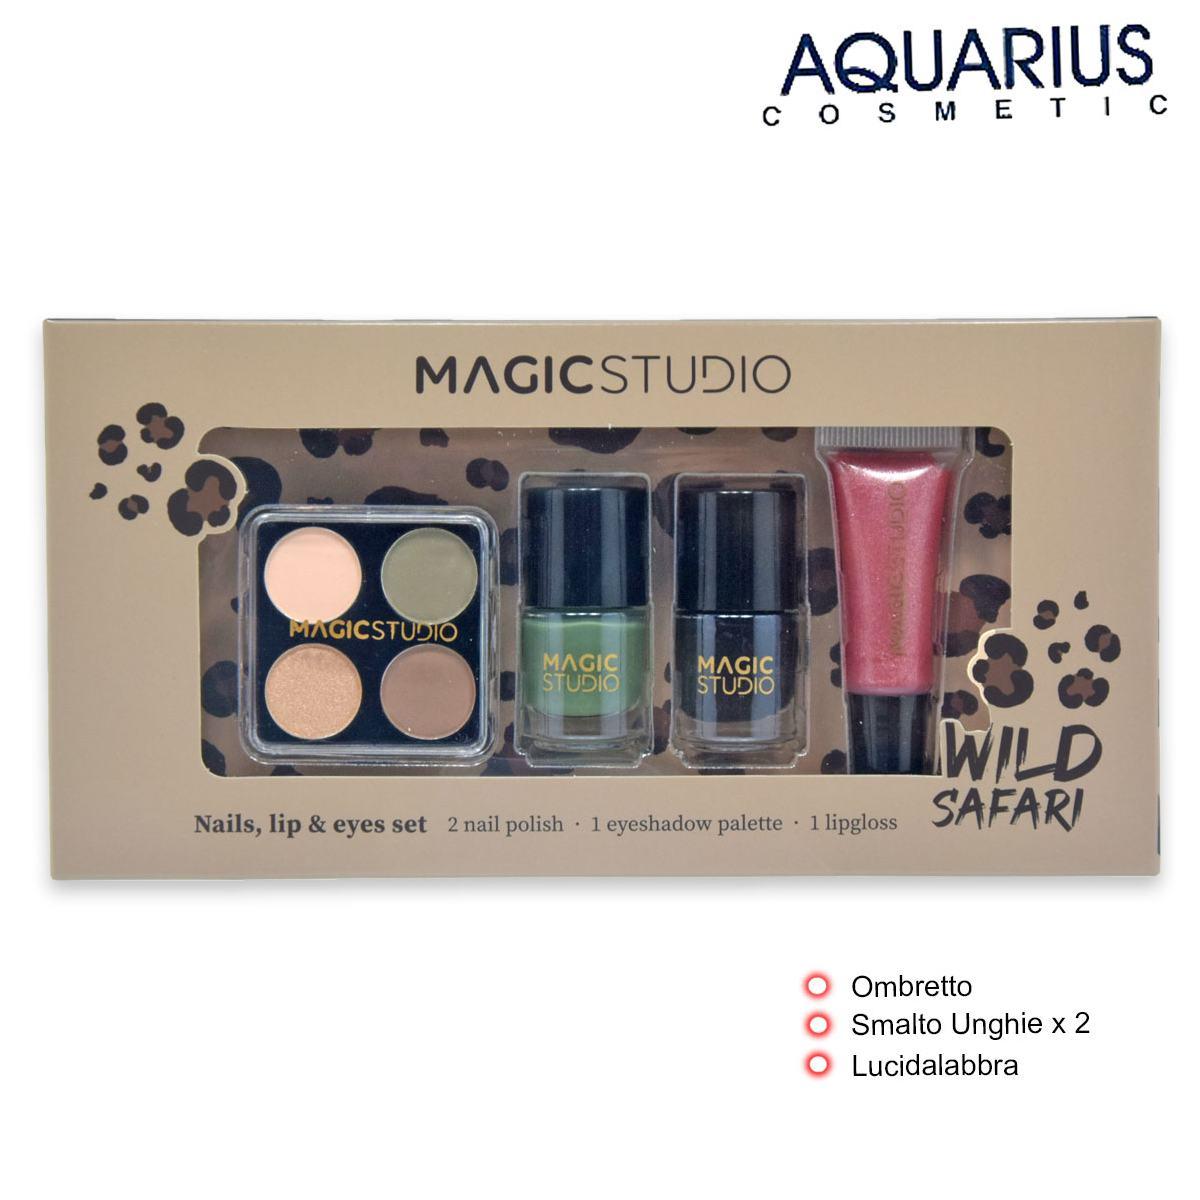 Magic Studio Wild Safari Makeup set